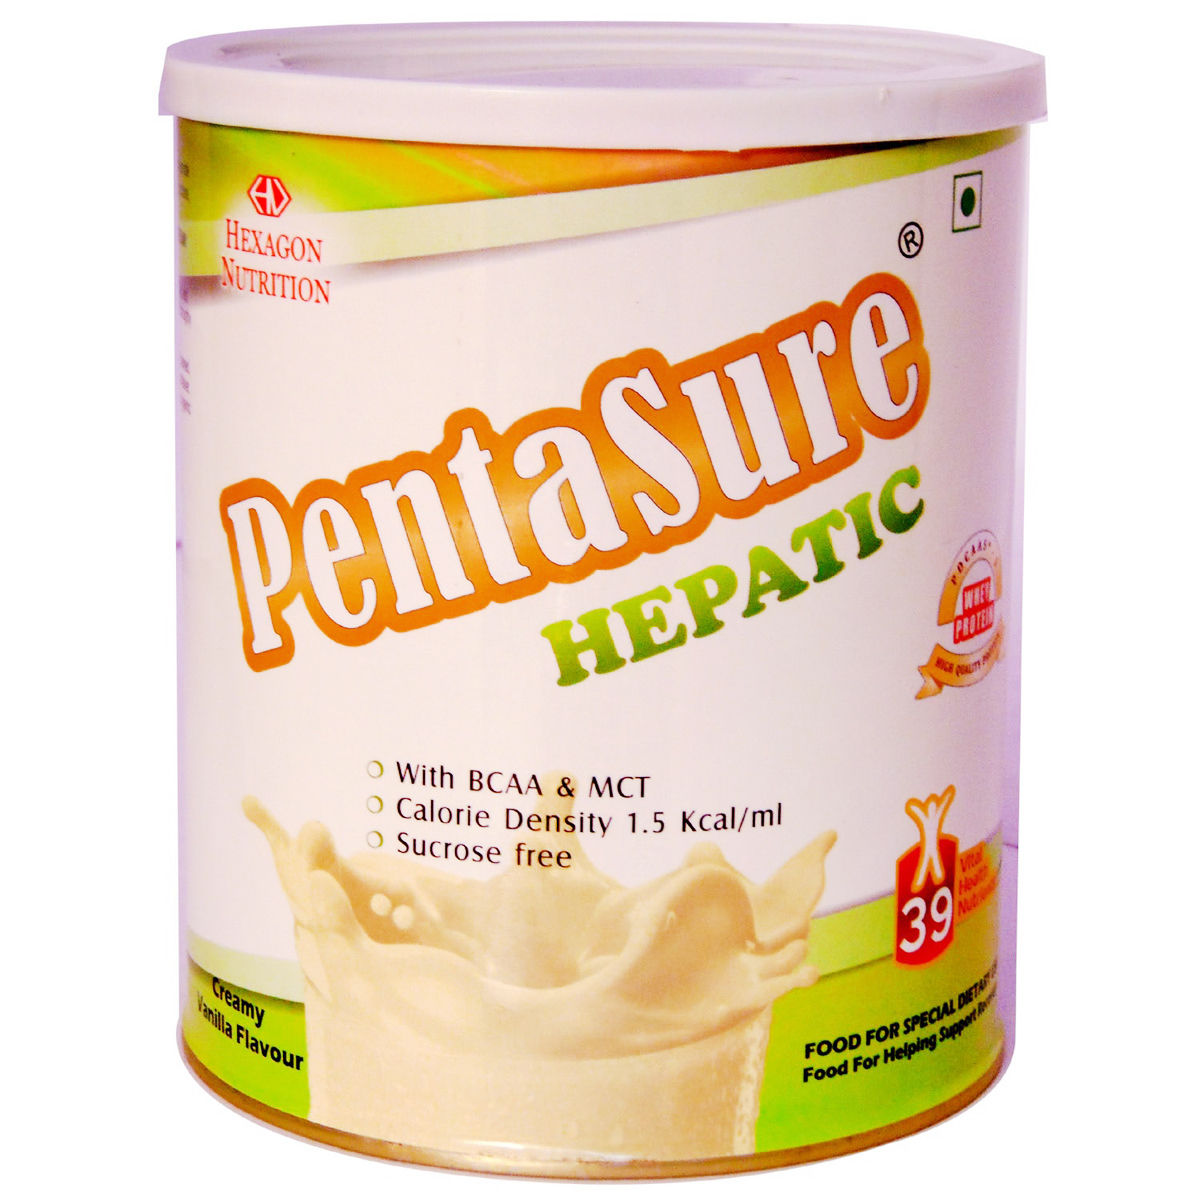 Buy Pentasure Hepatic Creamy Vanilla Flavour Powder, 400 gm Tin Online